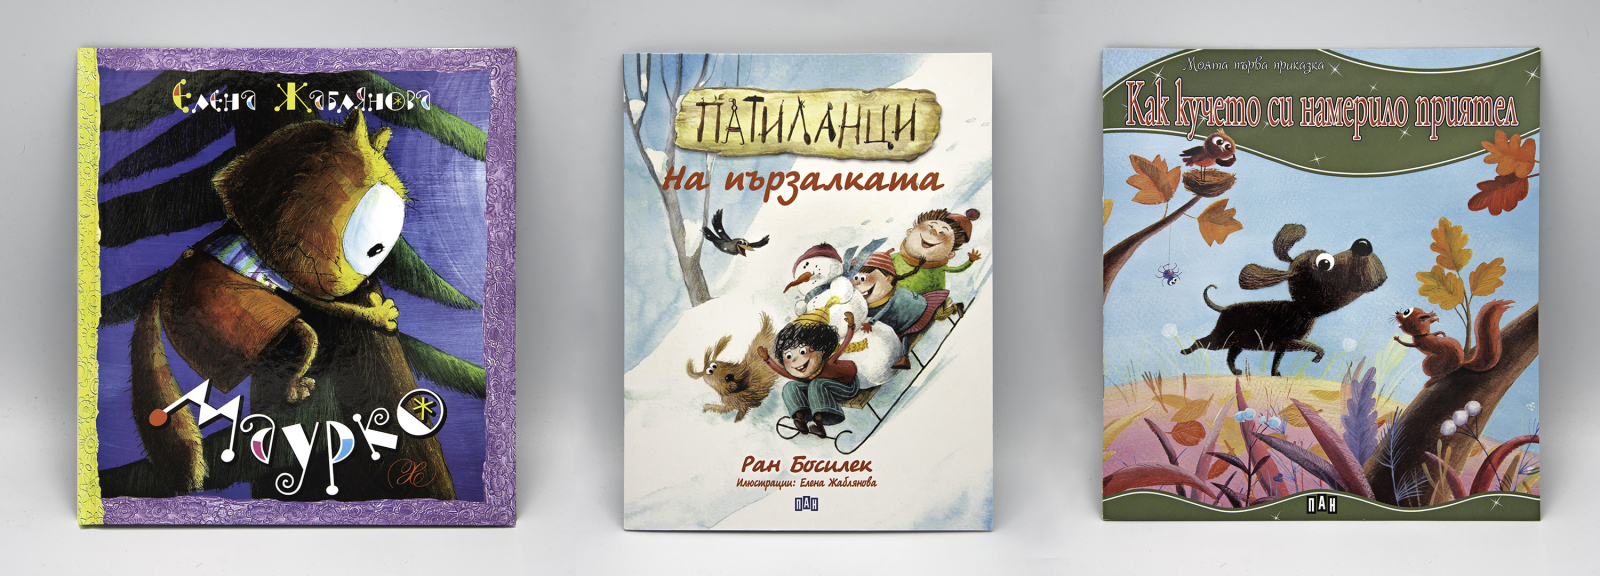 Elena Jablyanova author books